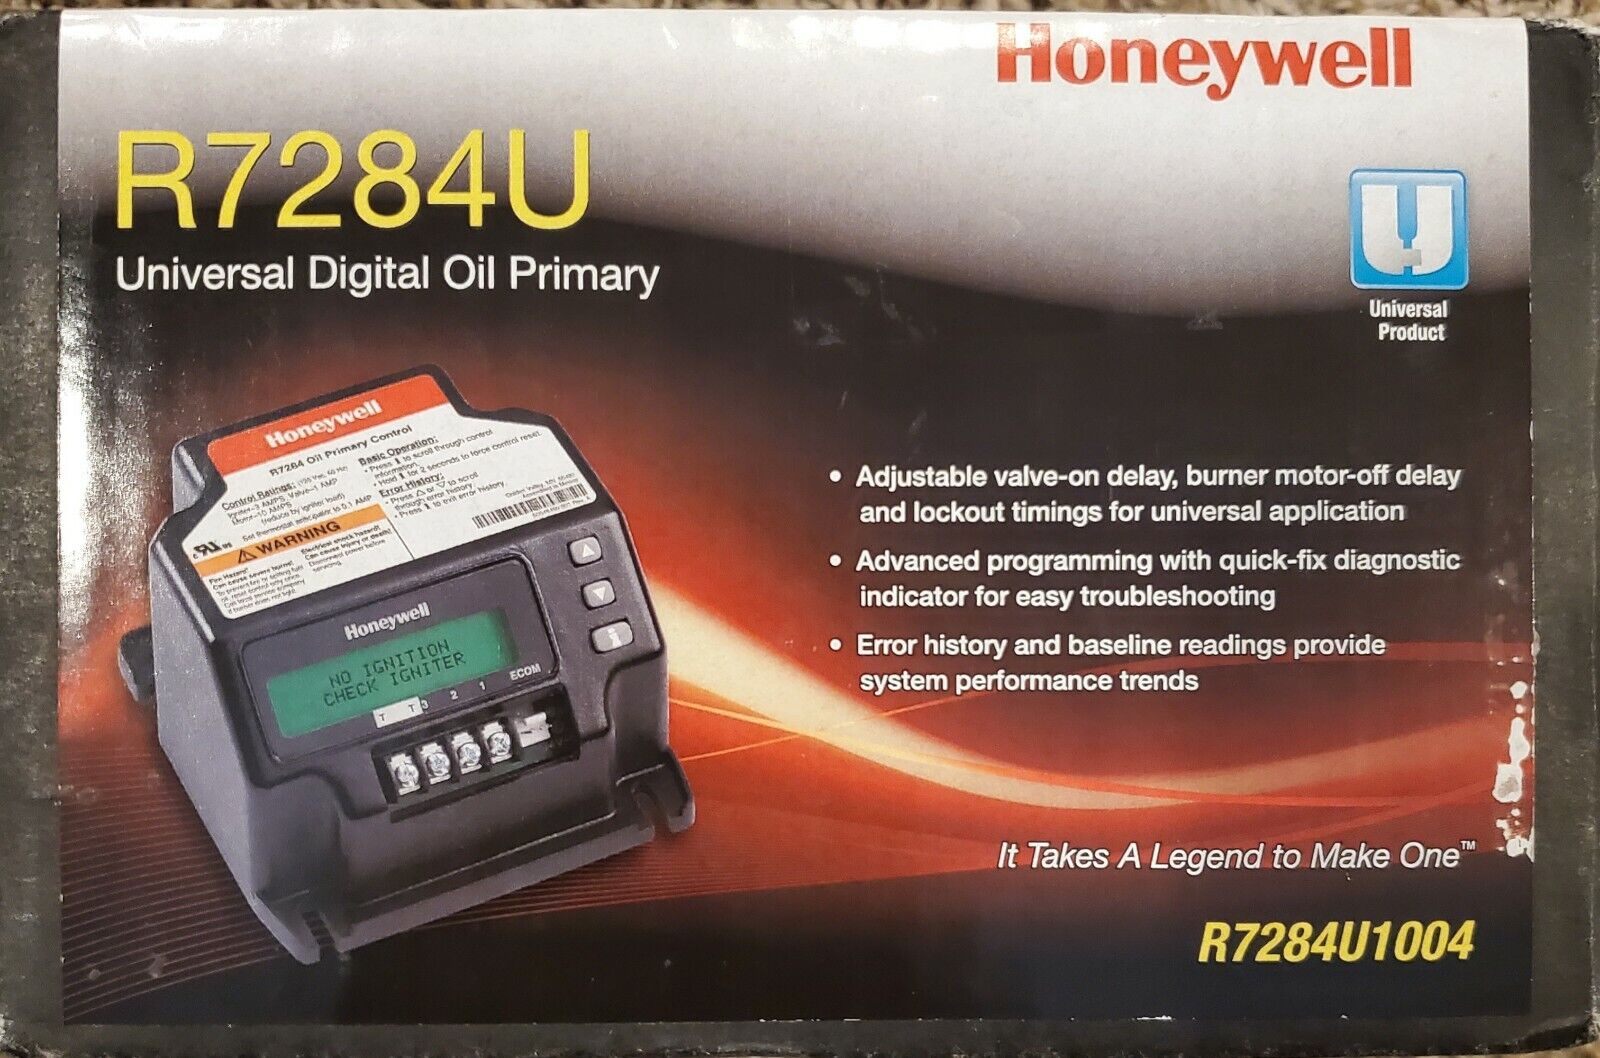 Honeywell R7284U-1004 Universal Digital Electronic Oil Primary, 1, Color